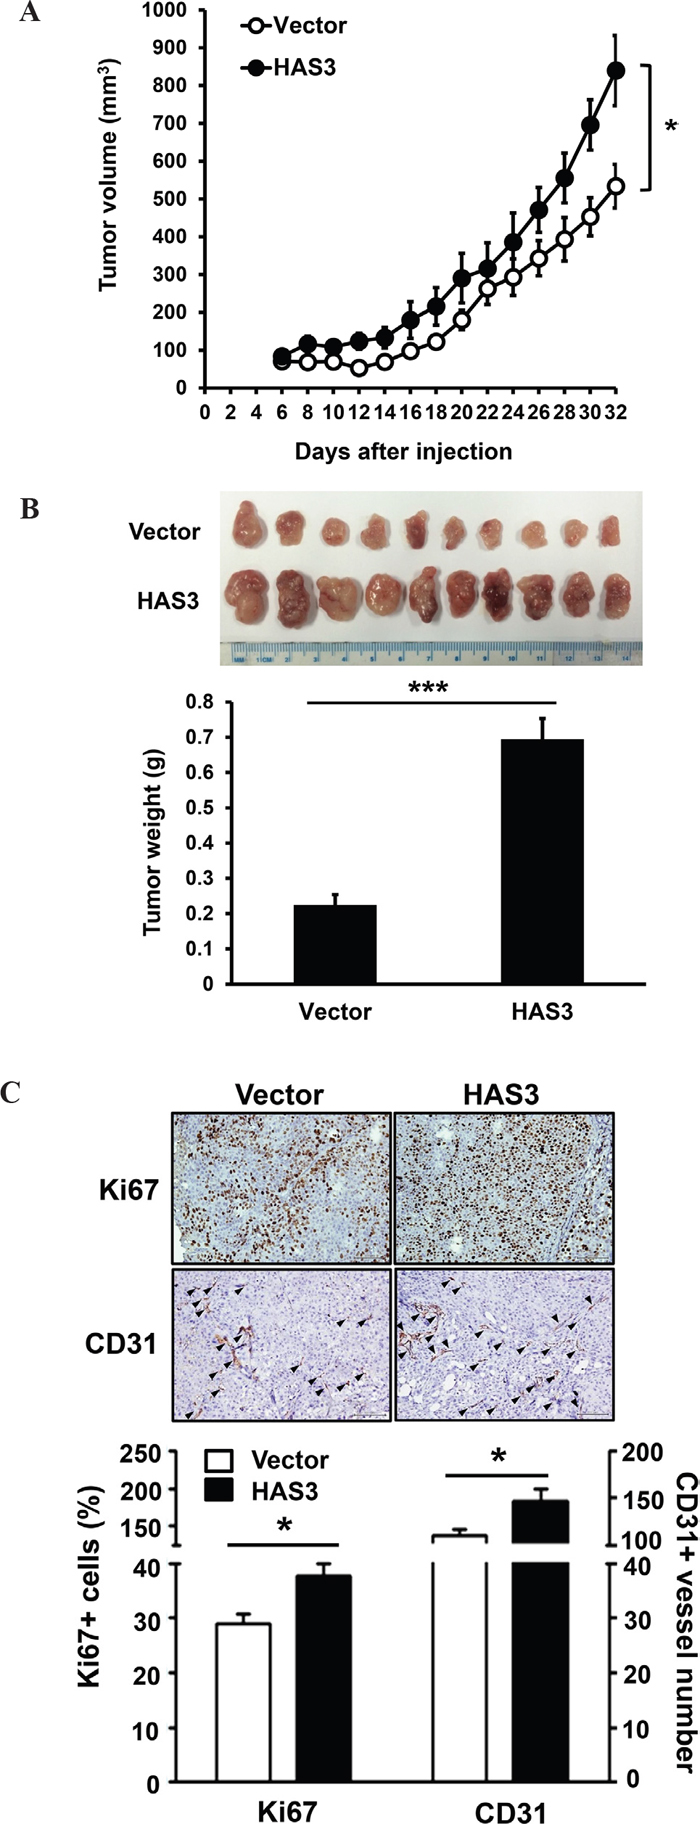 Ectopic HAS3 expression promoted xenograft tumorigenesis in vivo.